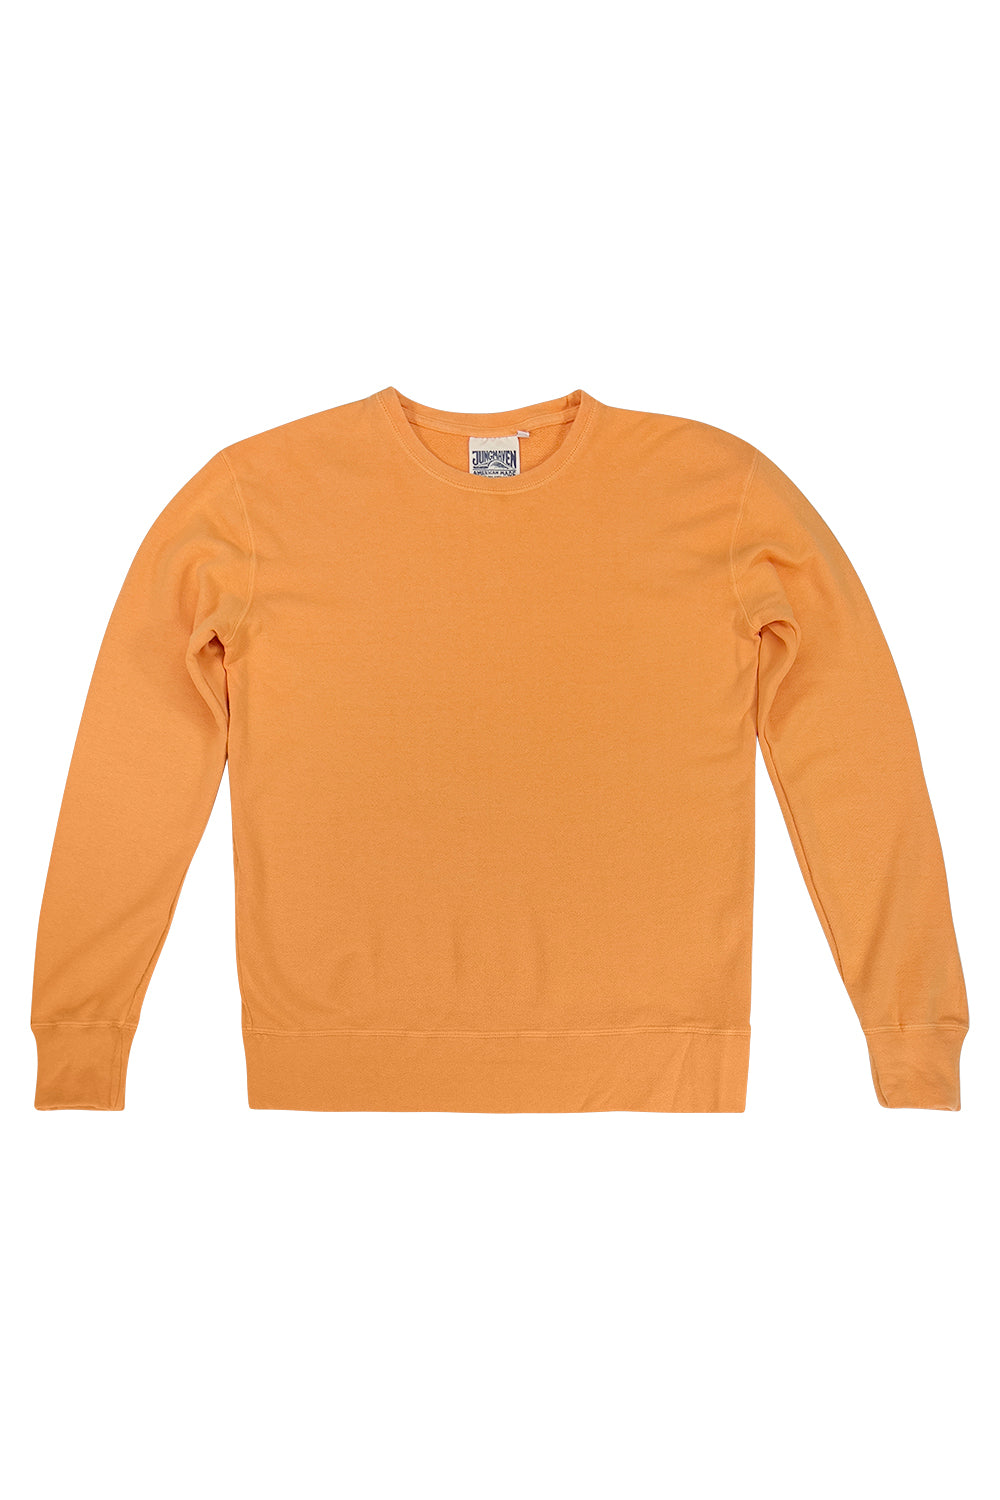 Tahoe Sweatshirt | Jungmaven Hemp Clothing & Accessories / Color: Apricot Crush